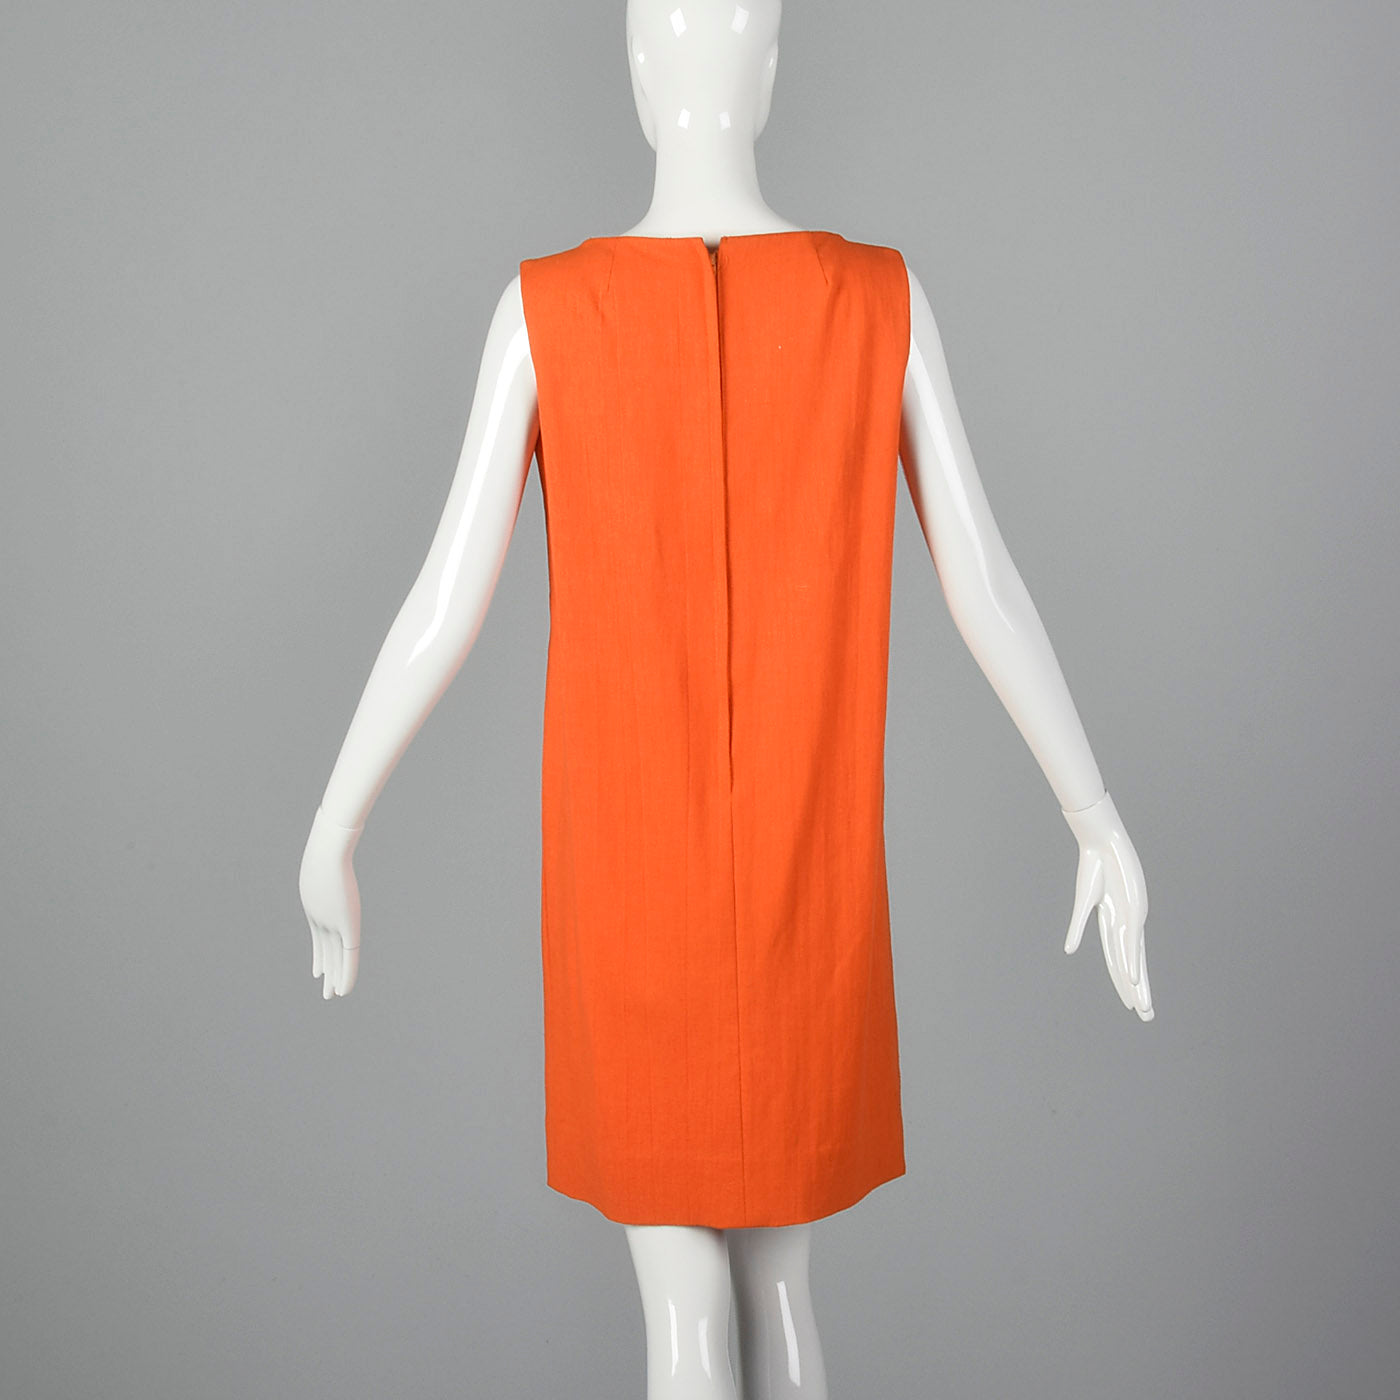 1960s Orange Shift Dress with Sunflower Applique